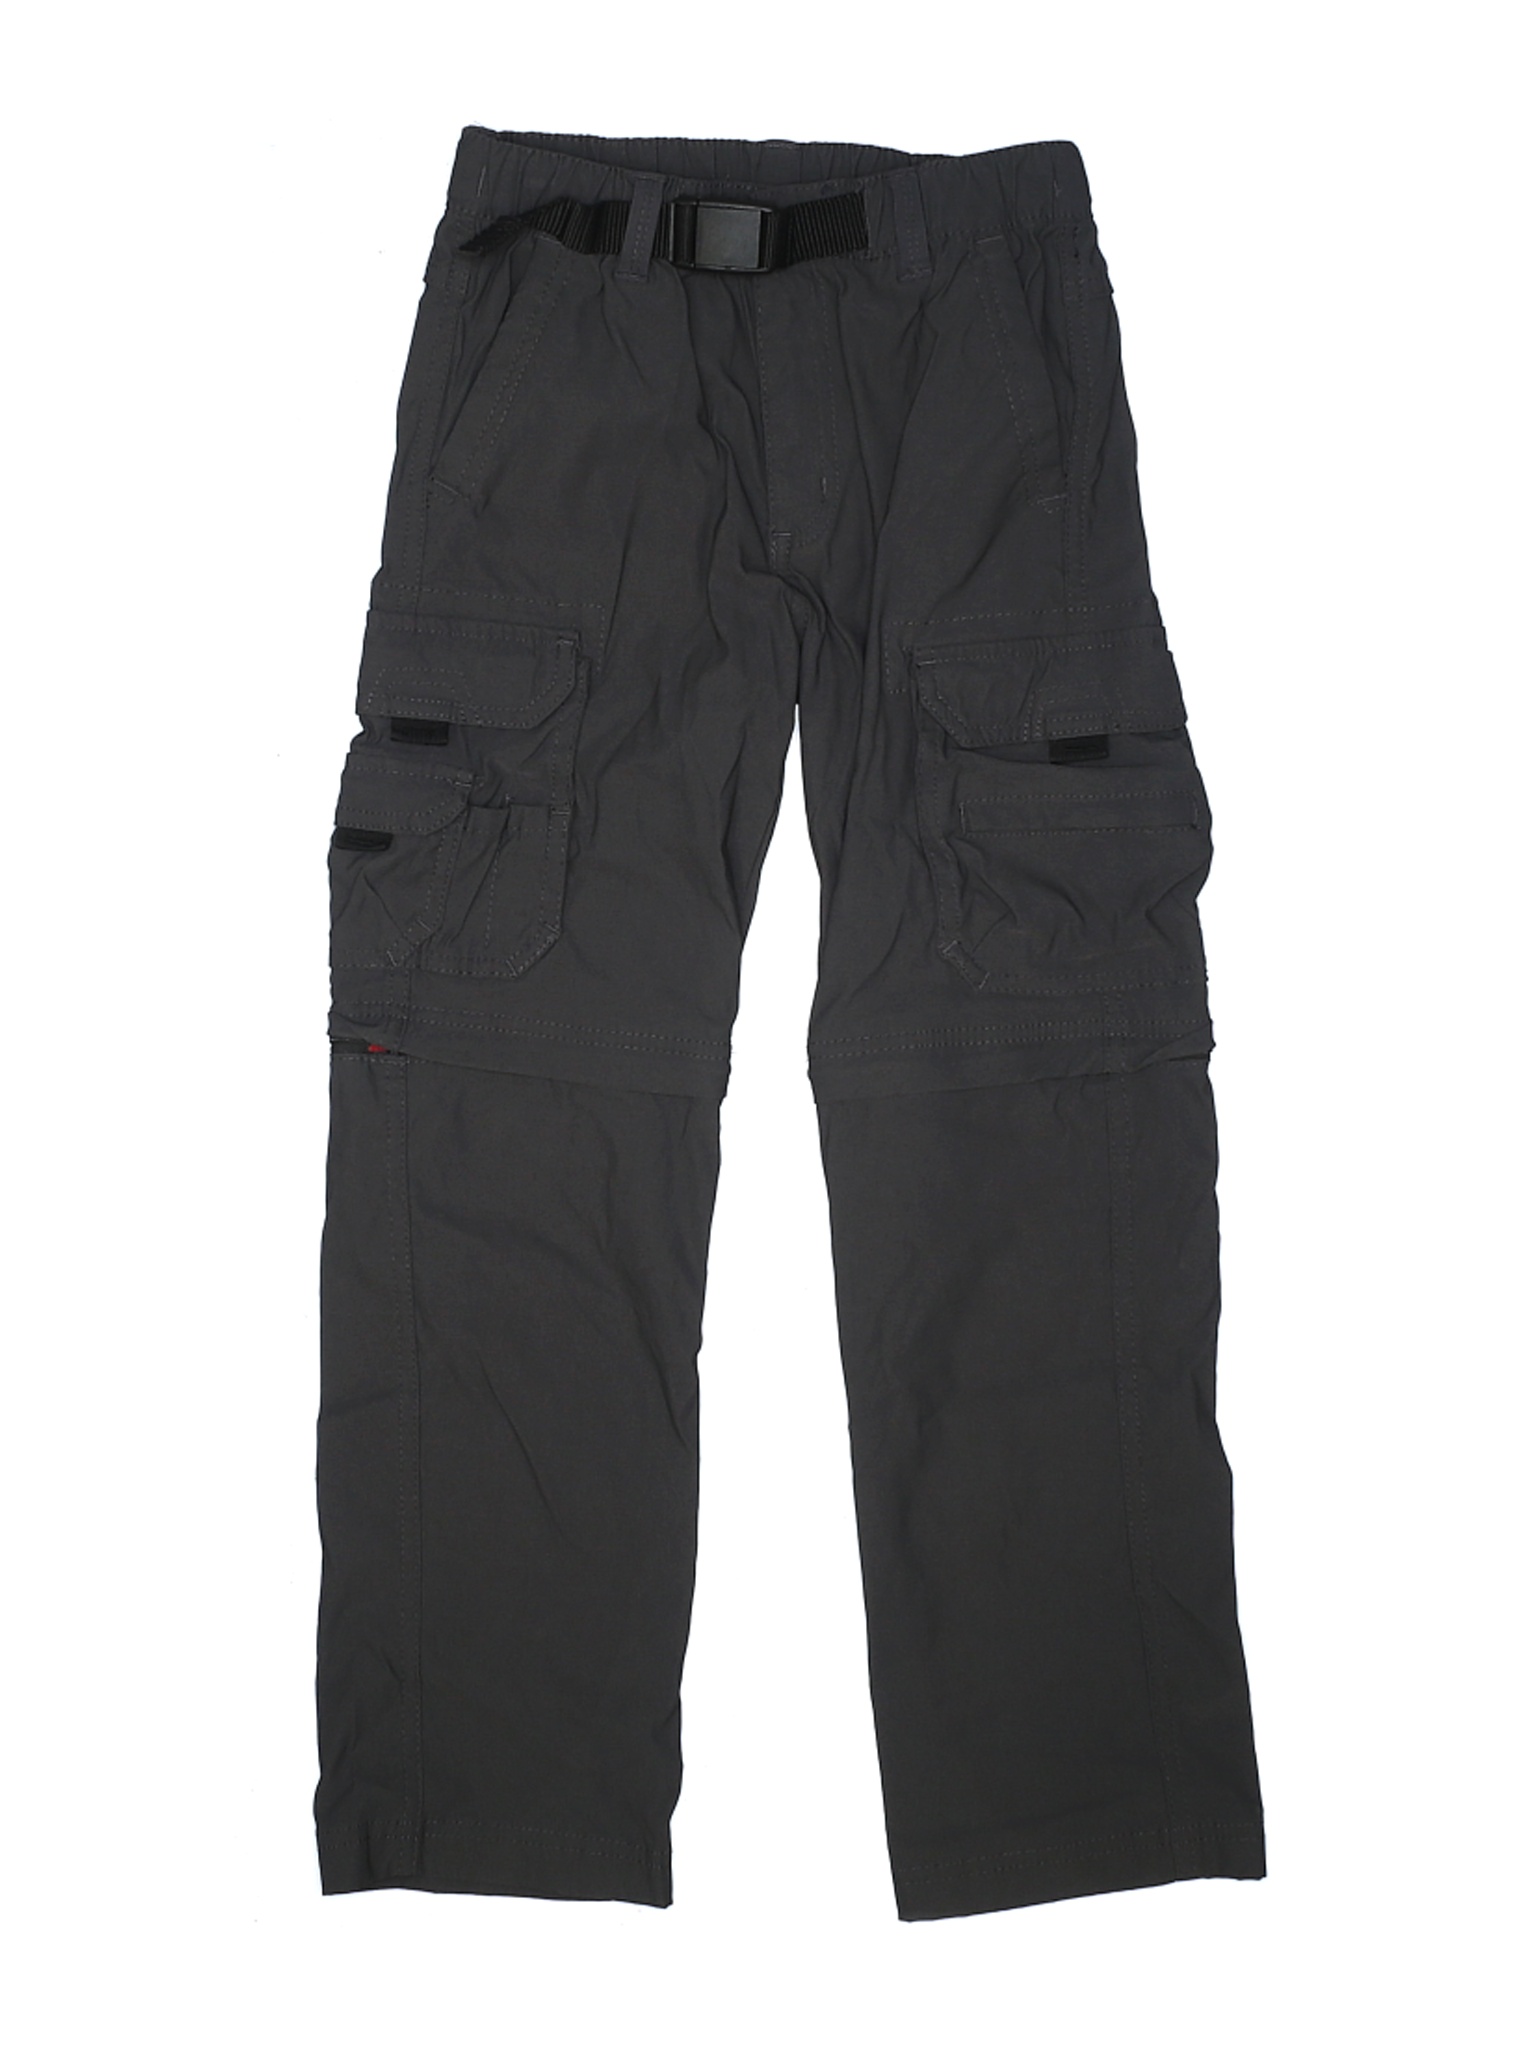 Unionbay Boys Black Cargo Pants 7 | eBay